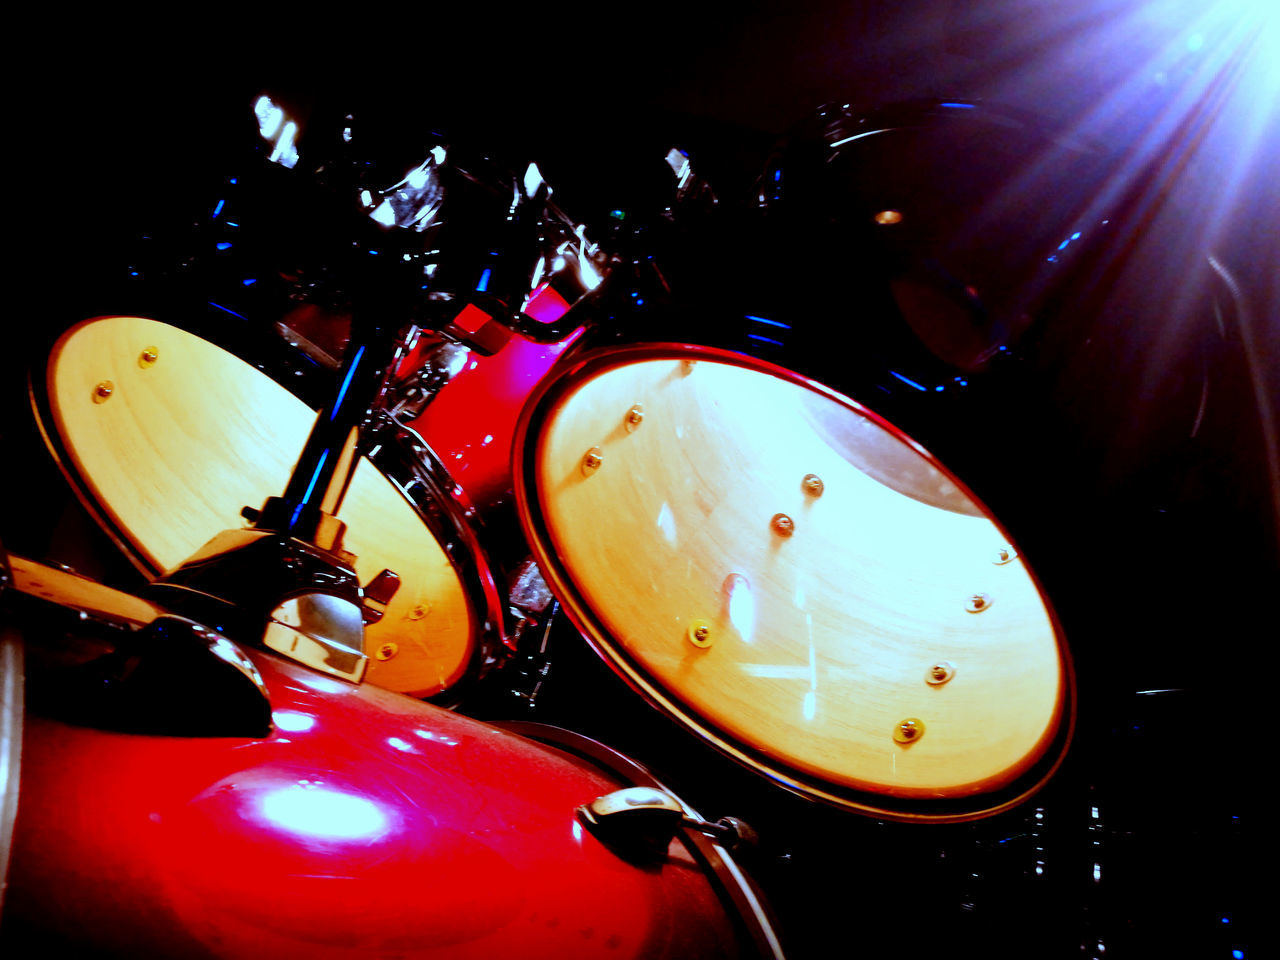 The 00 drum kit series